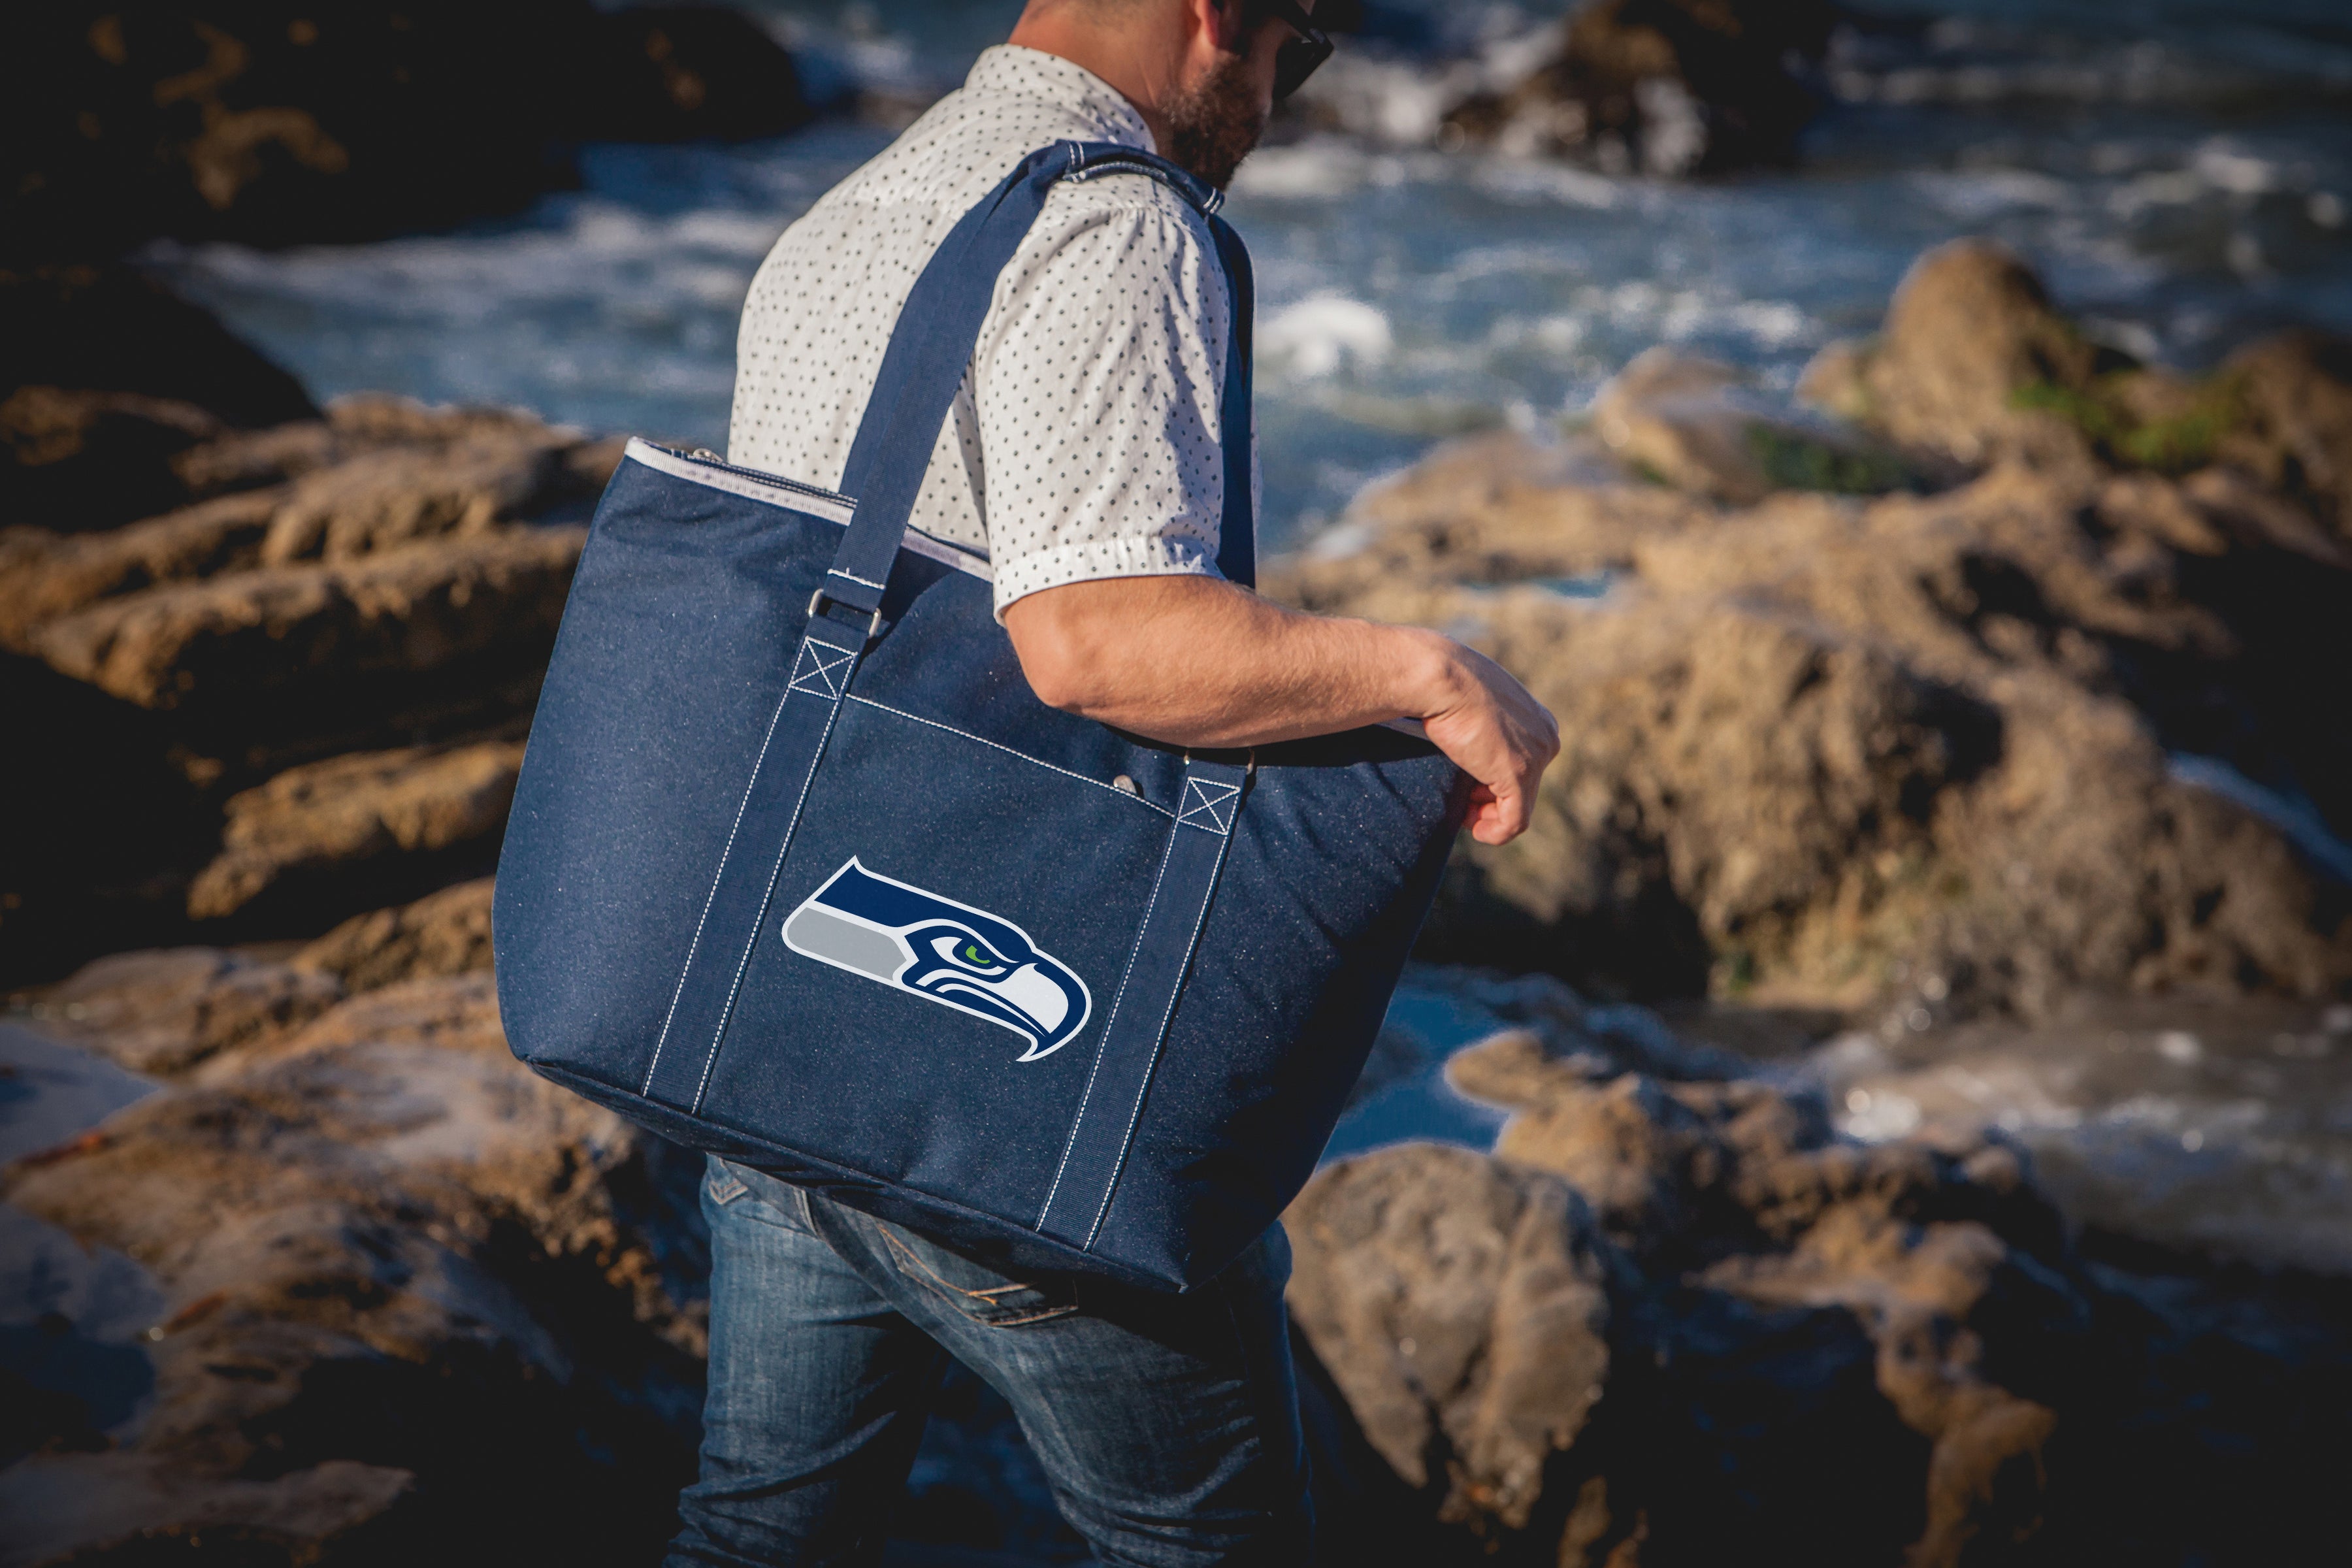 Seattle Seahawks - Tahoe XL Cooler Tote Bag